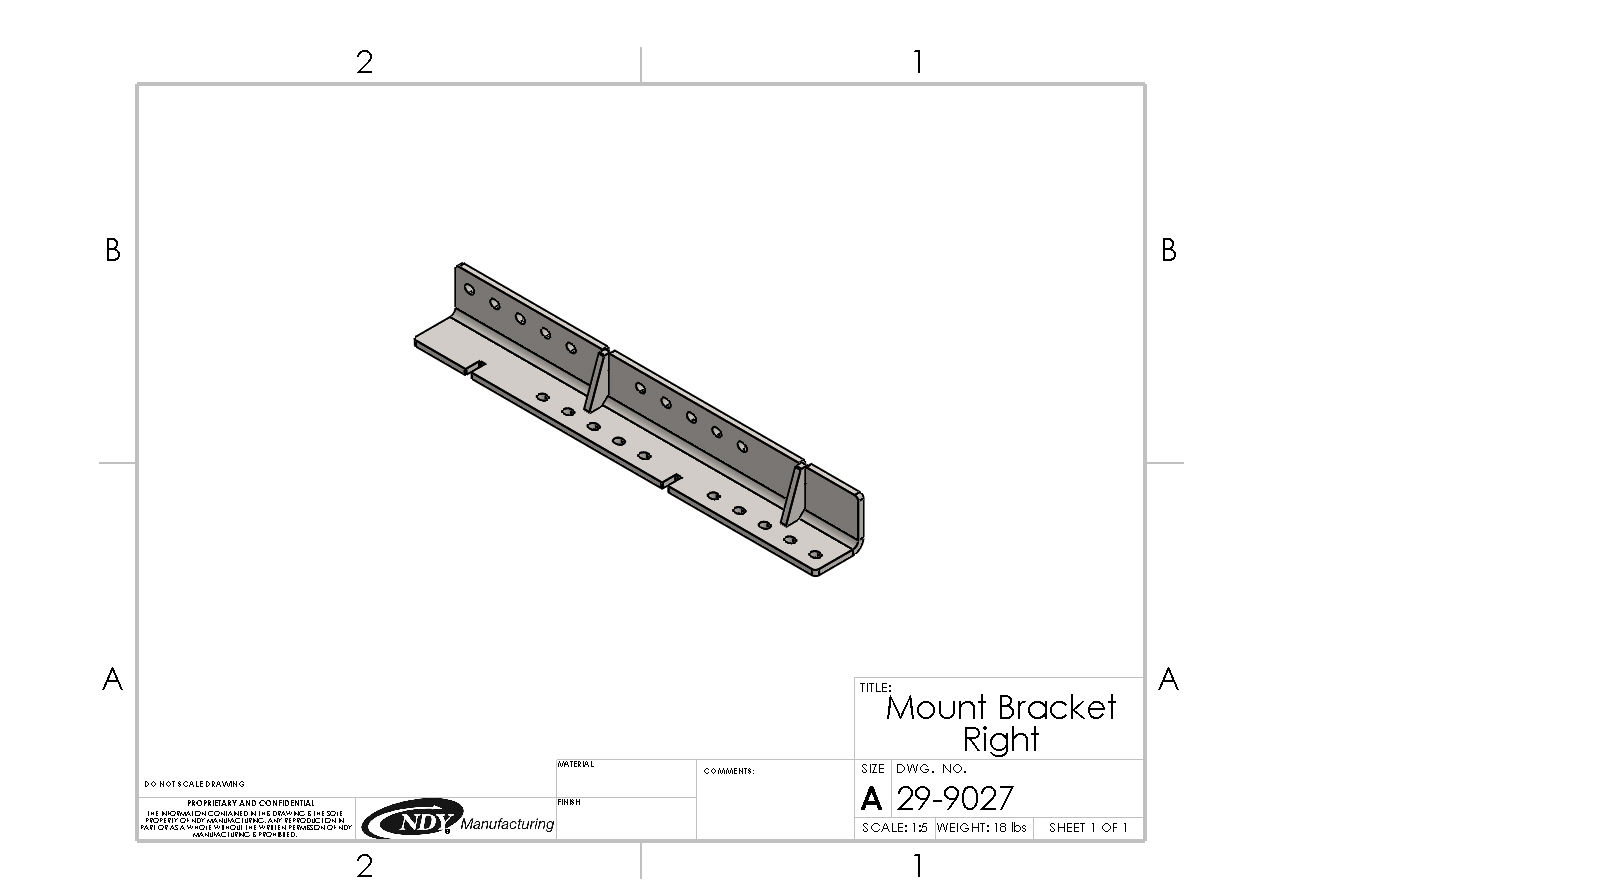 A drawing of the Rock Box Mount Bracket Fits John Deere FWA.